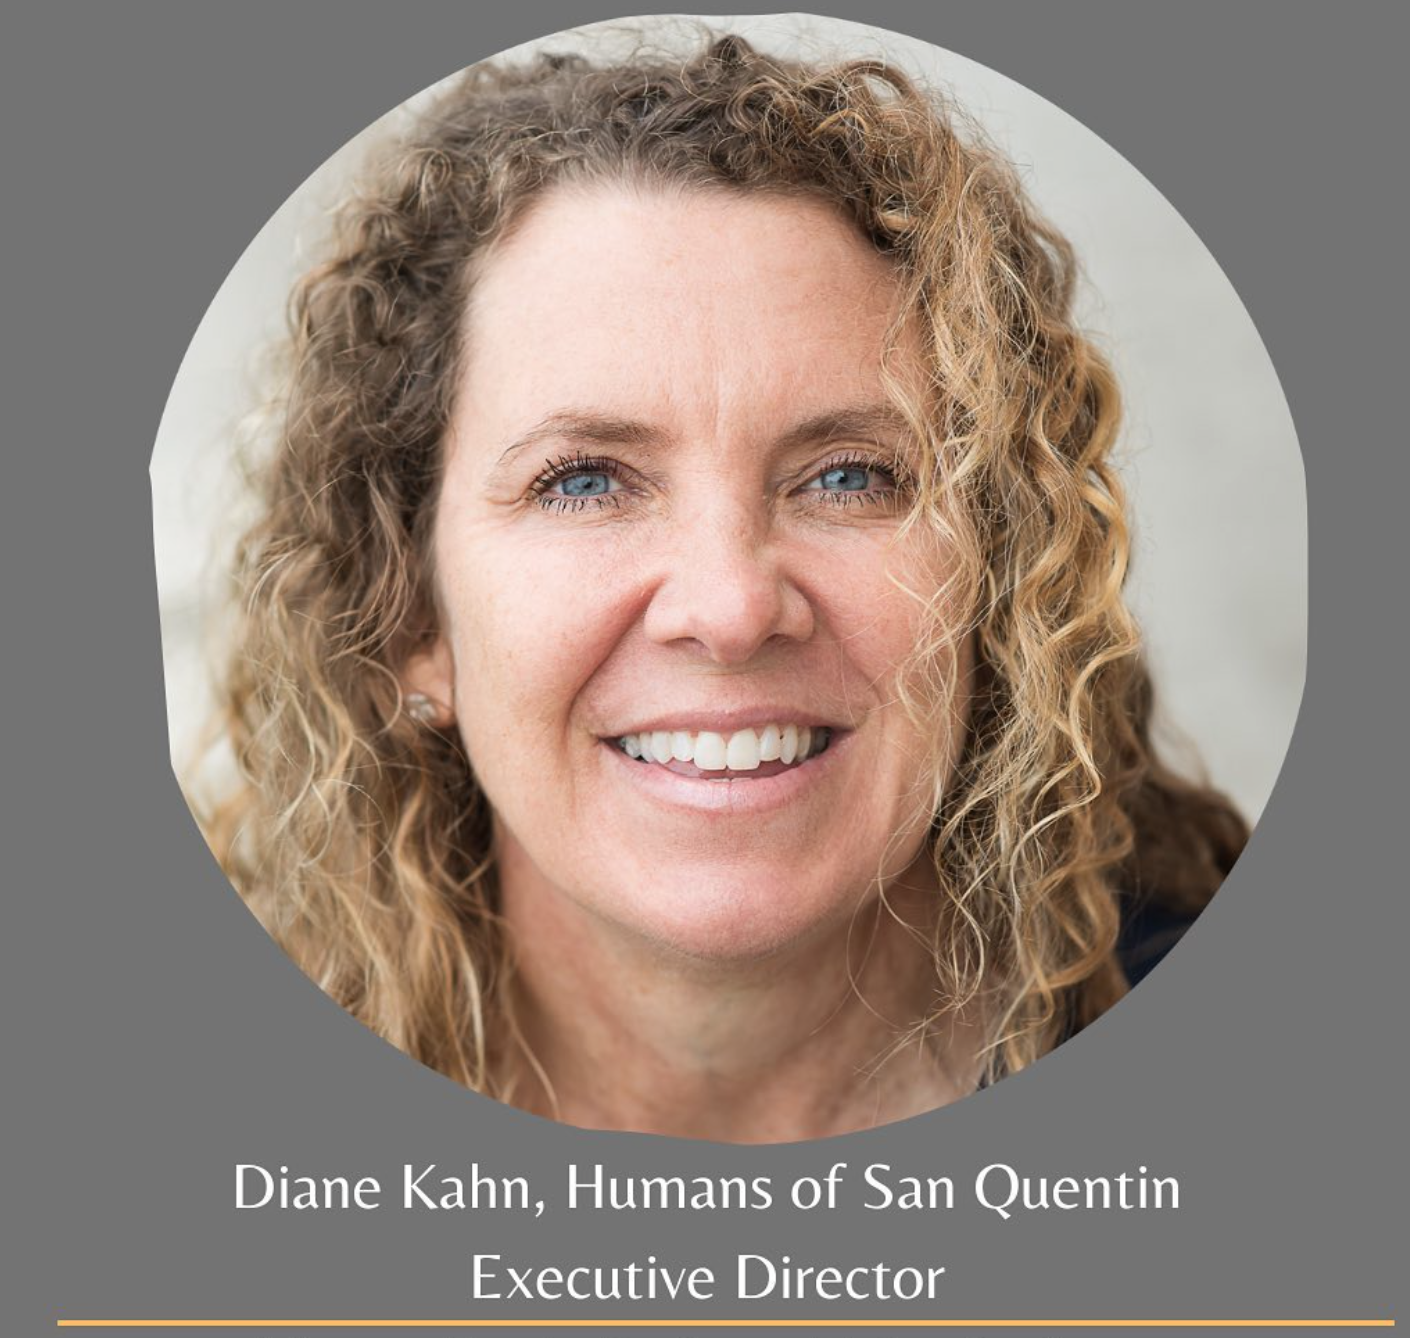 Humans of San Quentin Executive Director Diane Kahn